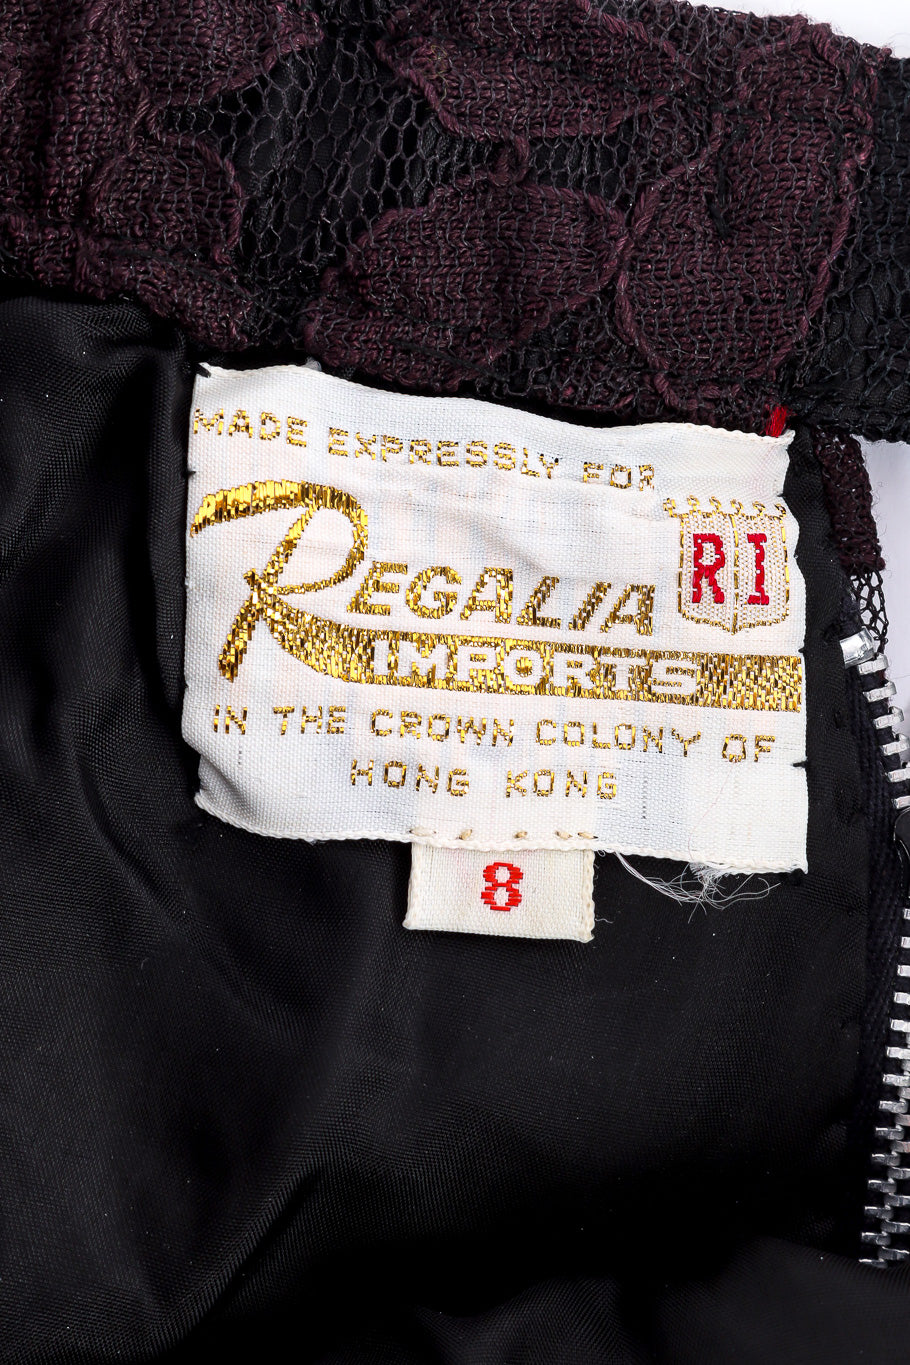 Vintage beaded and sequin lace set Regalia Imports Label Photo. @recessla